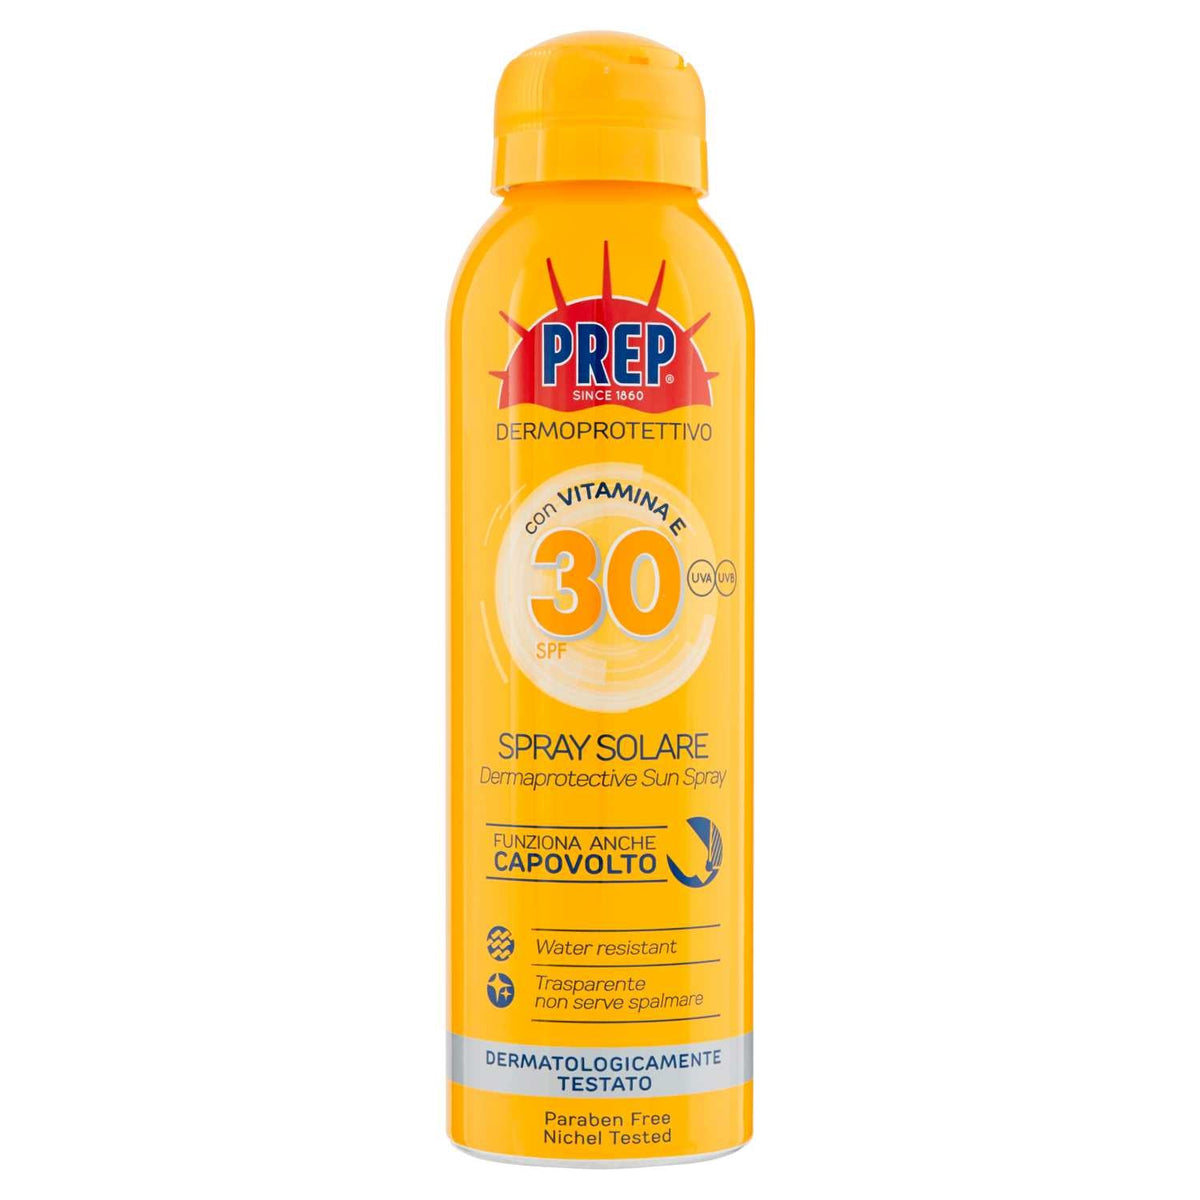 Prep Spray Solare dermoprotettivo 30spf 150ml SPRAY SOLARE